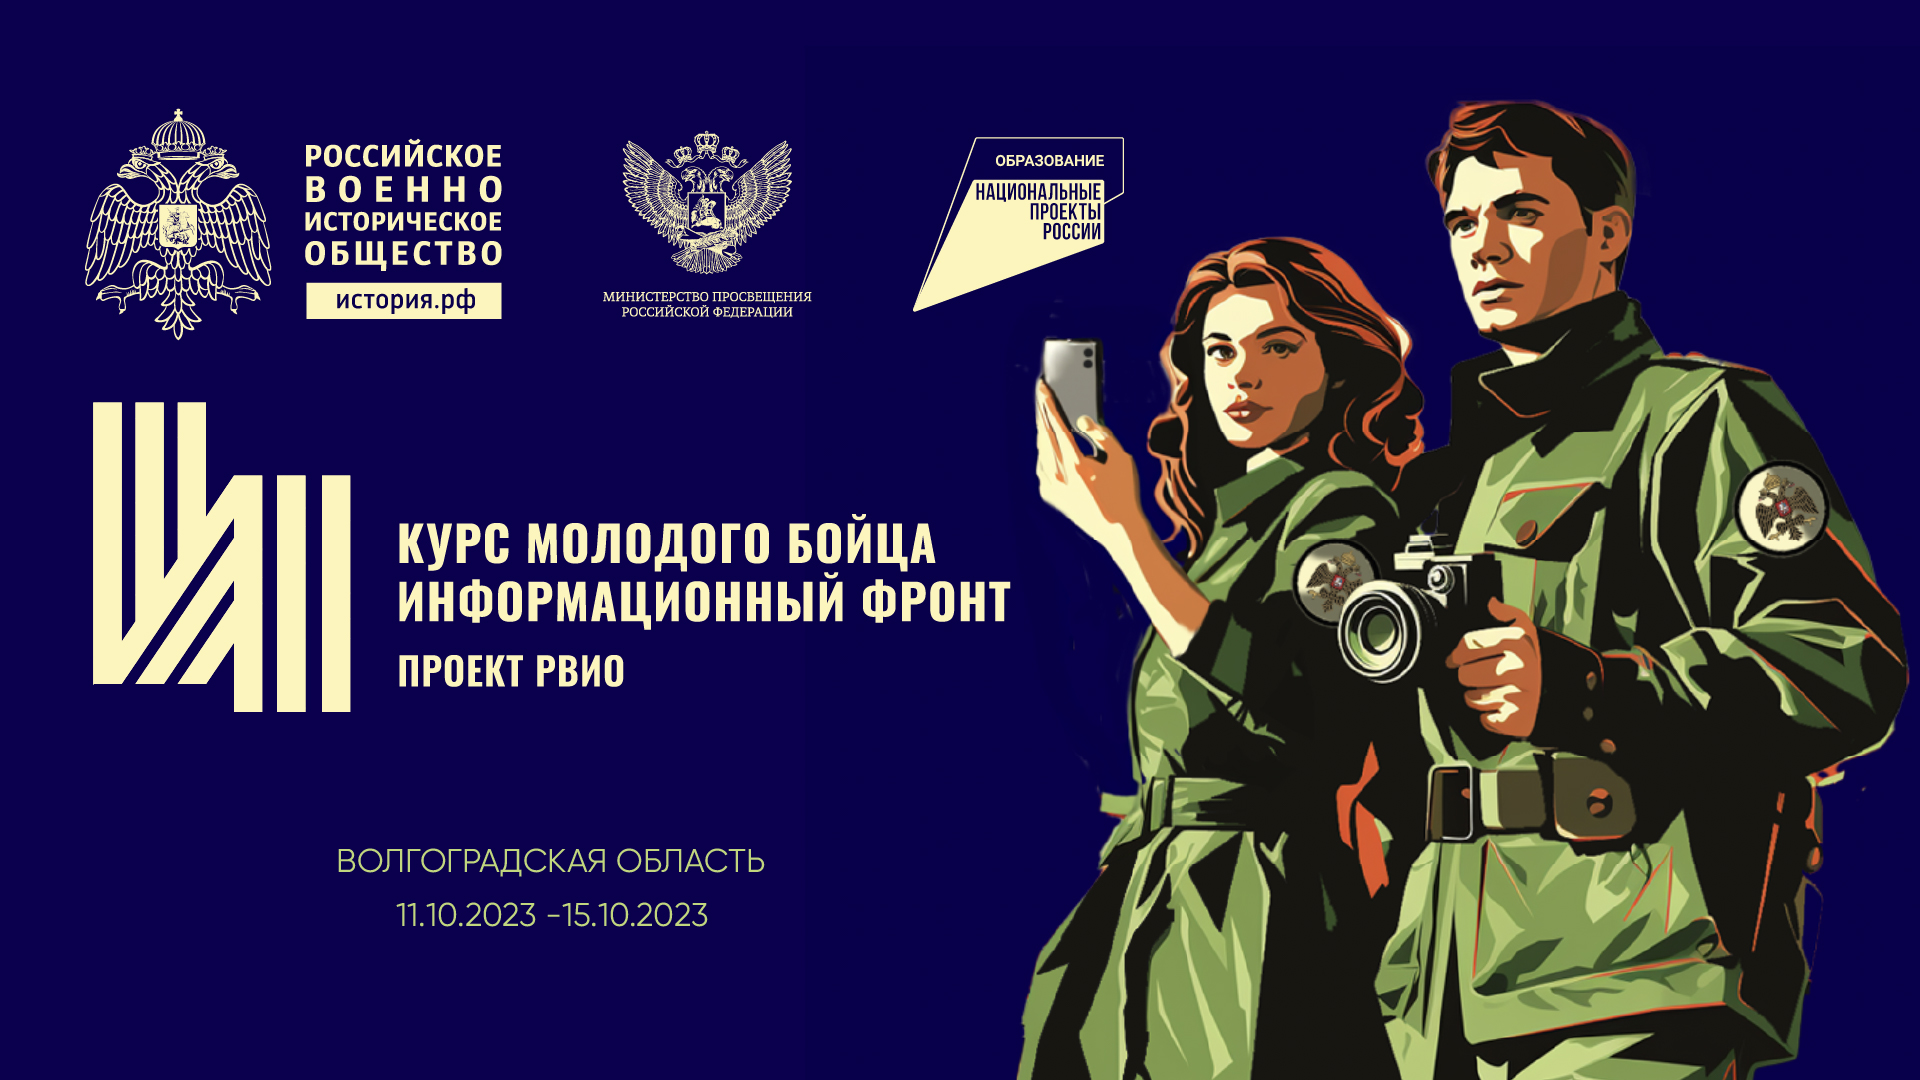 vserossijskij-istoriko-prosvetitelskij-forum-kurs-molodogo-bojtsa-informatsionnyj-front